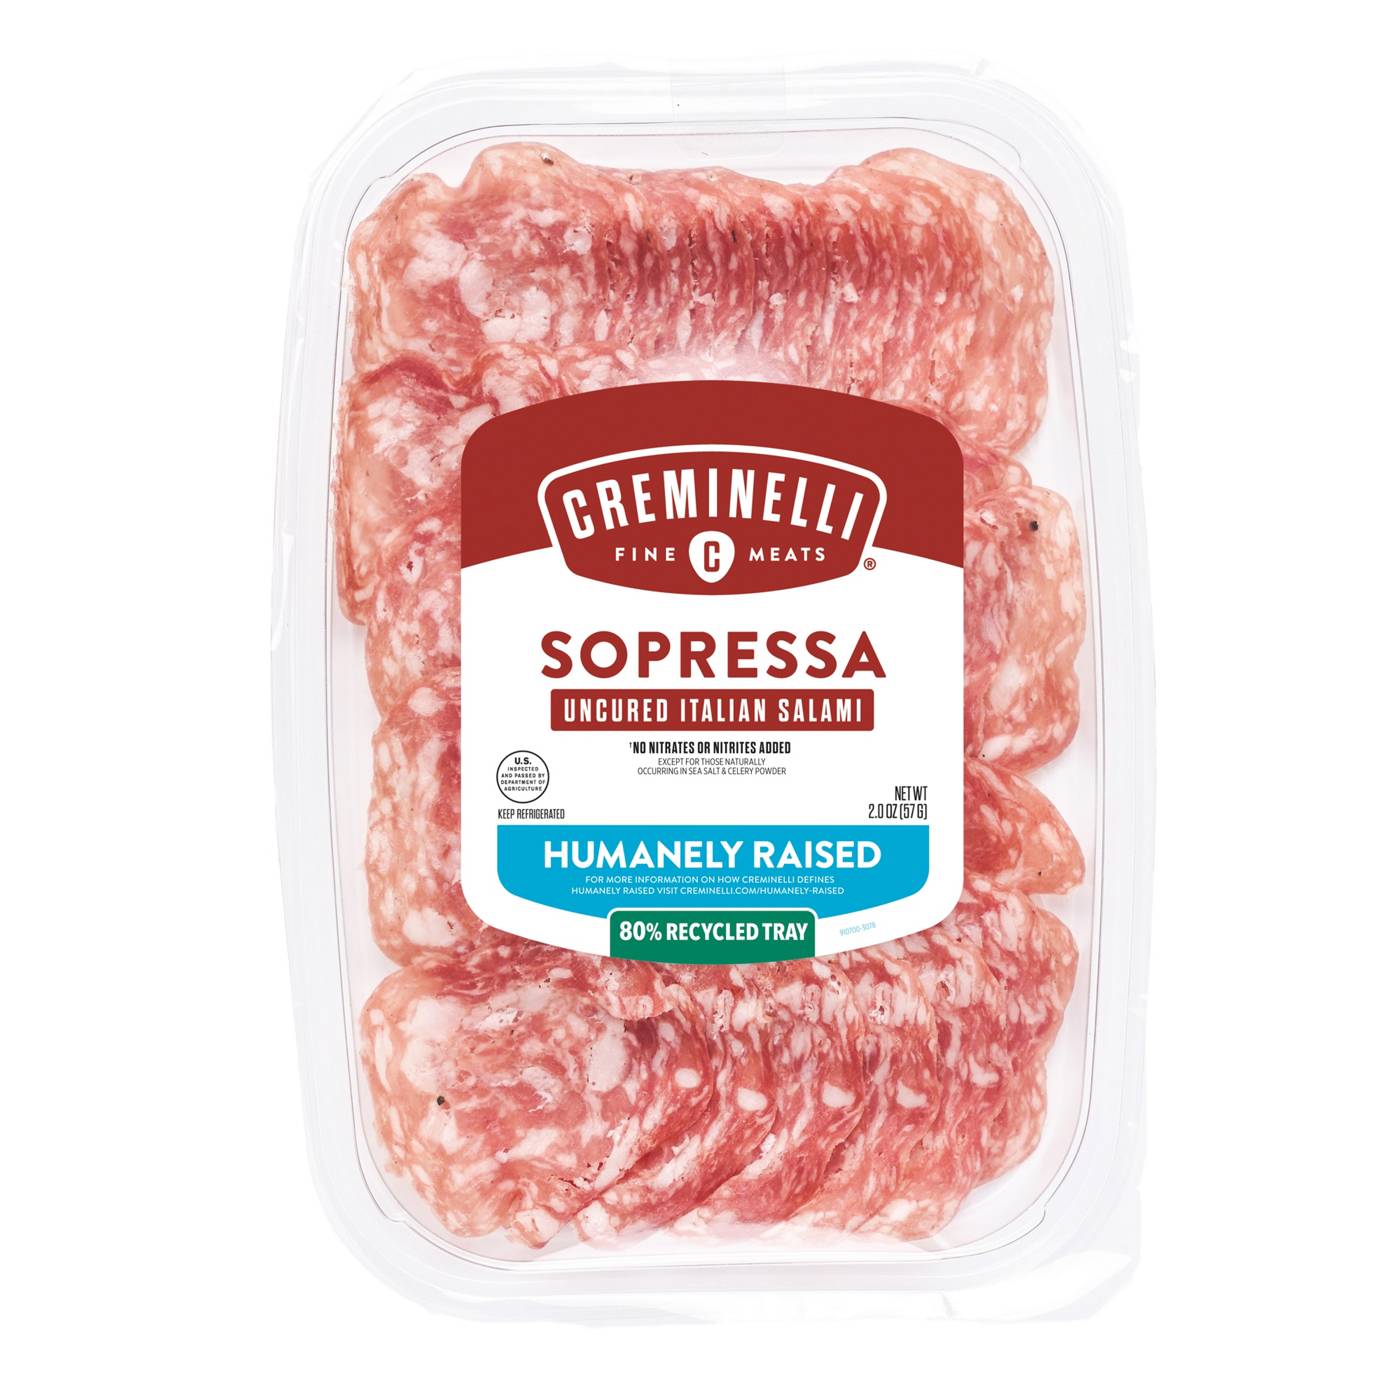 Creminelli Fine Meats Sliced Sopressa; image 1 of 2